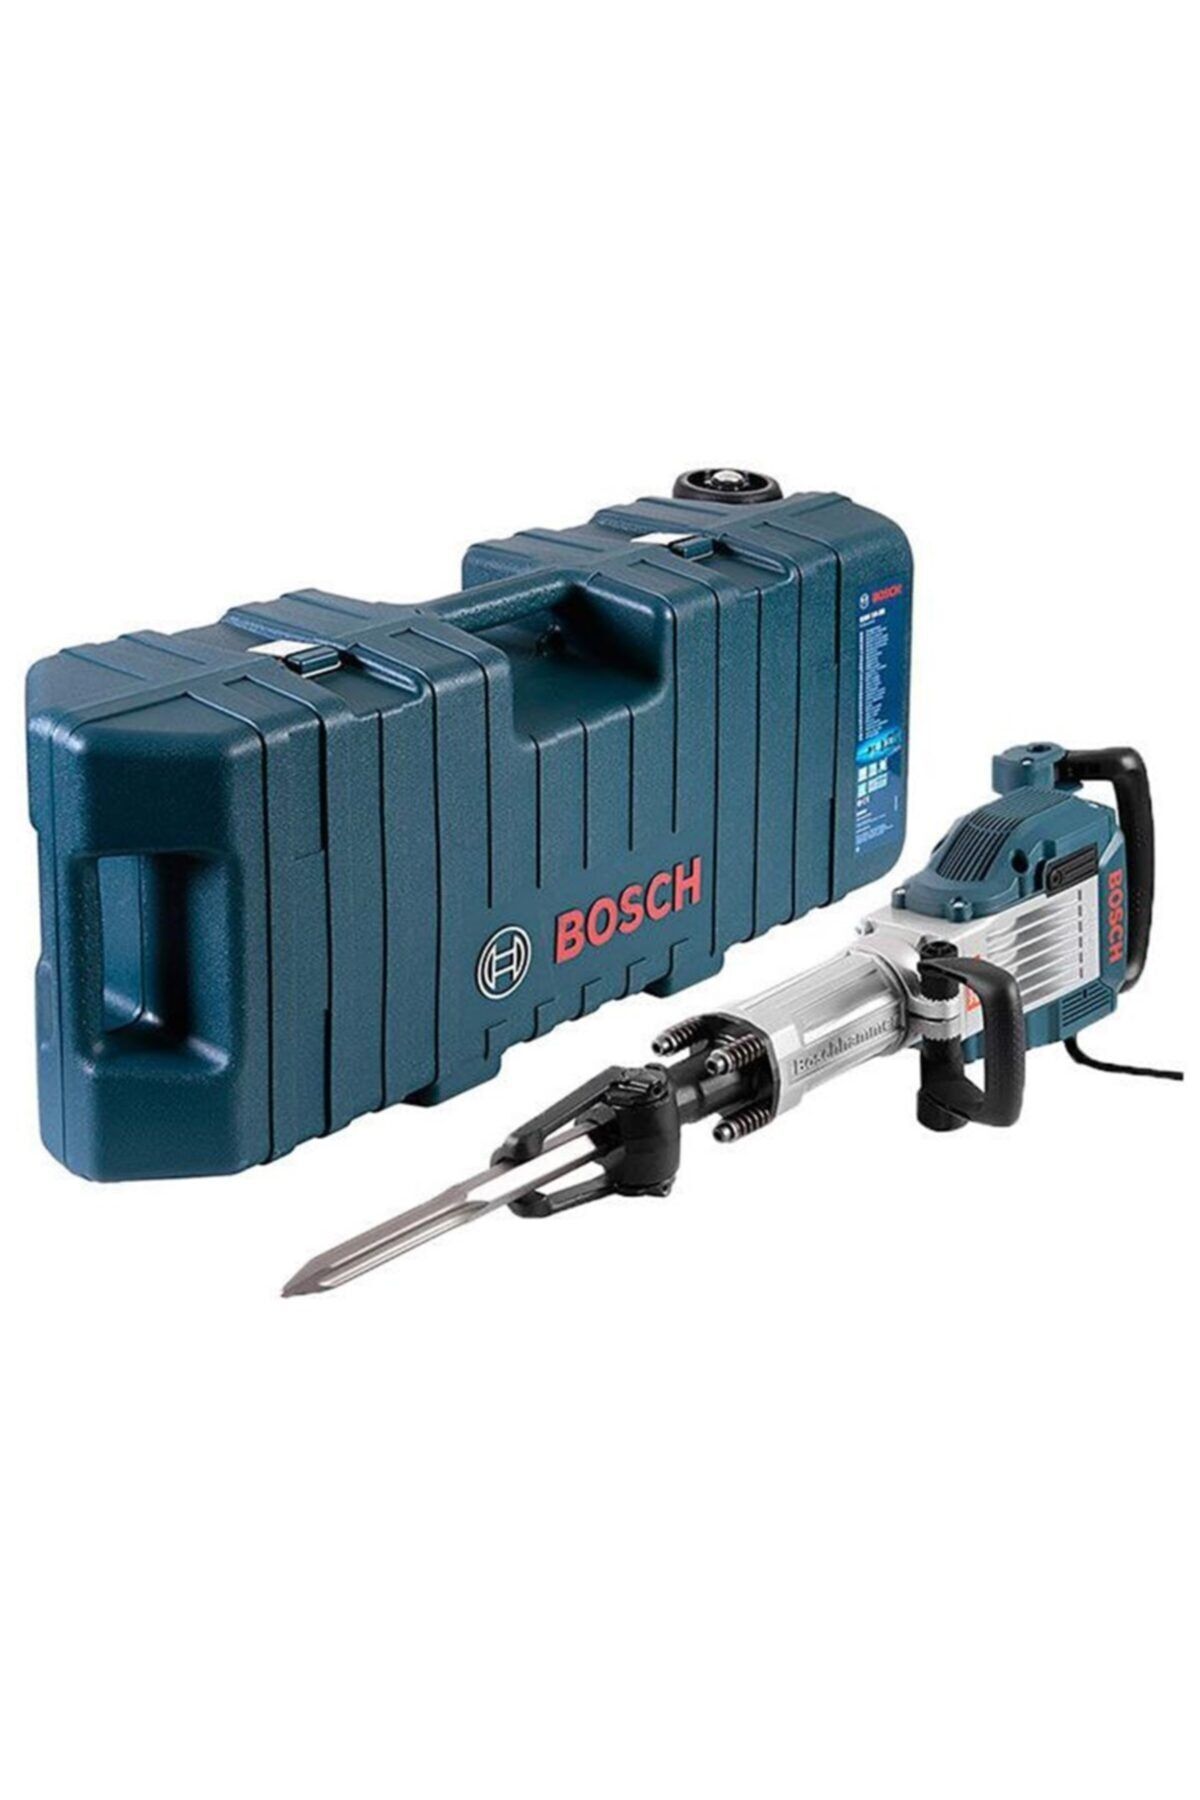 Bosch Professional Gsh 16-28 Kırıcı